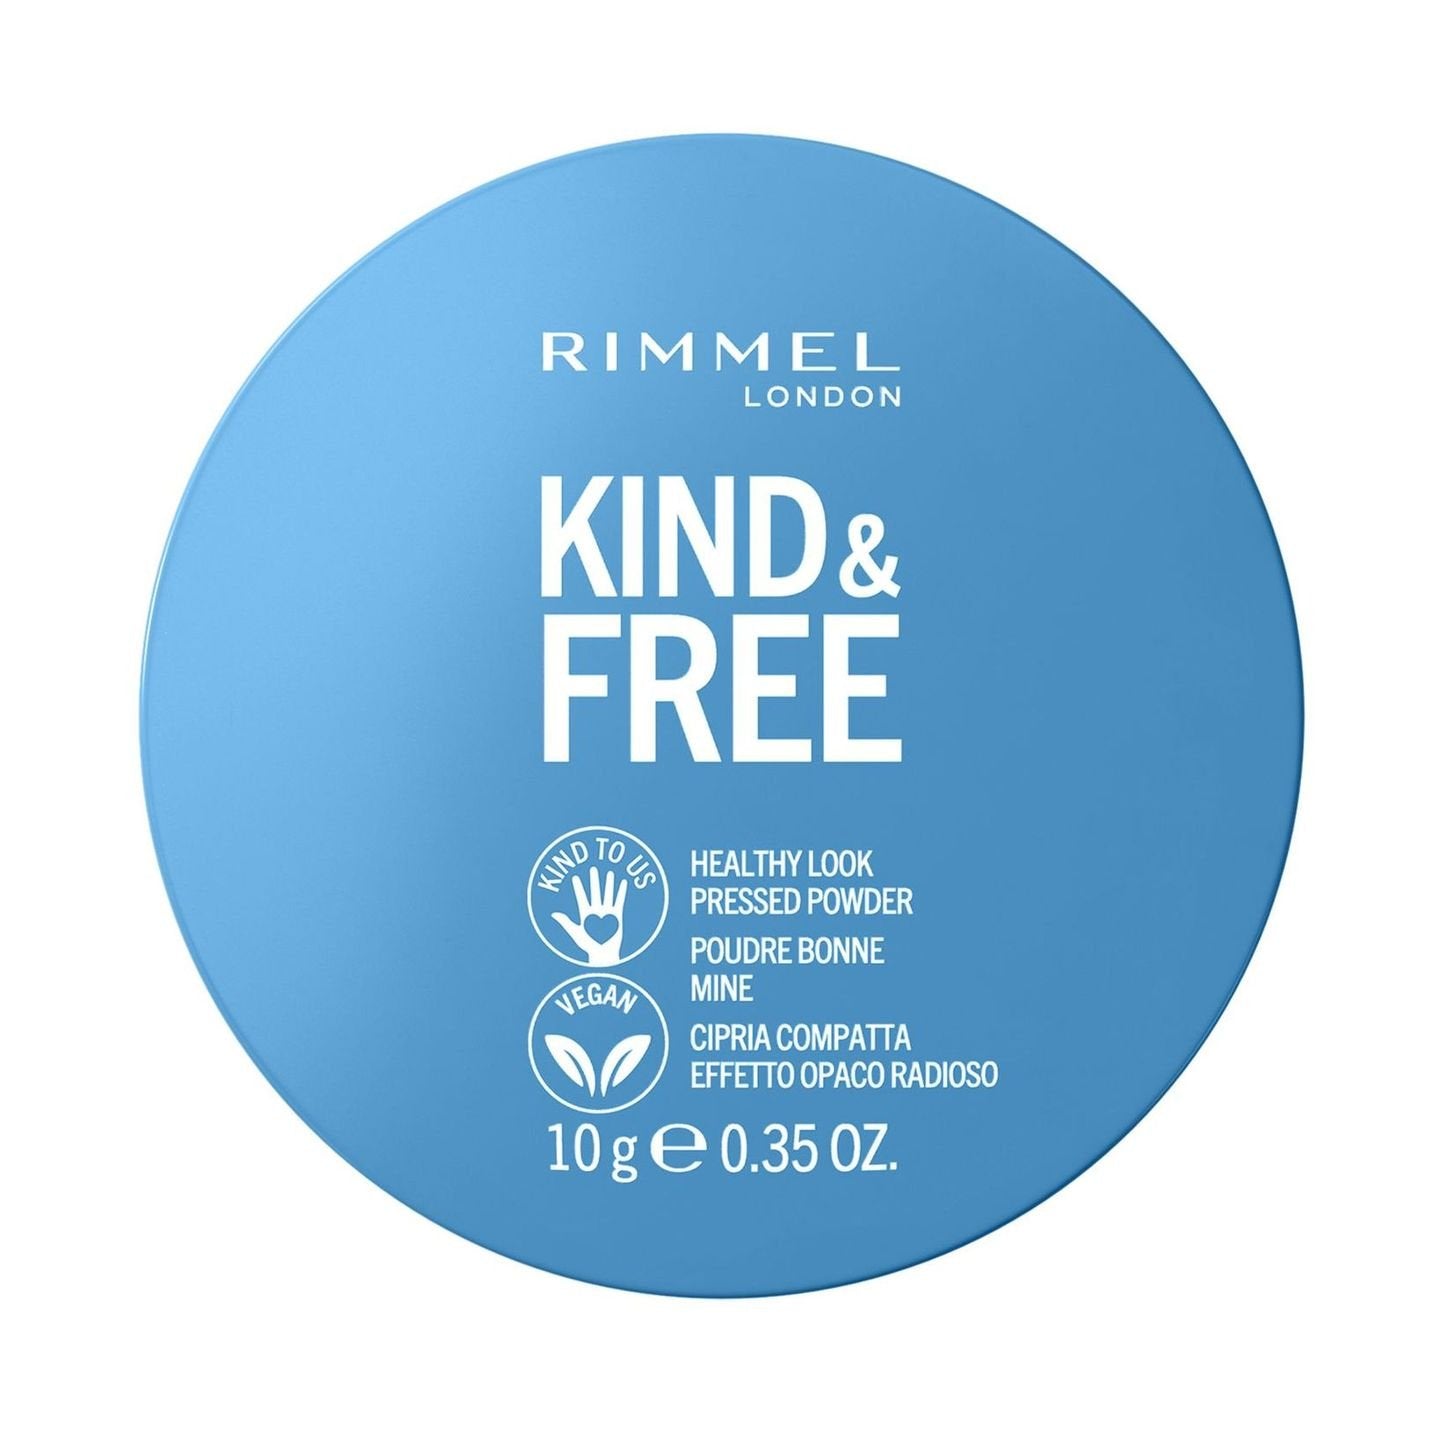 Rimmel kind & free powder